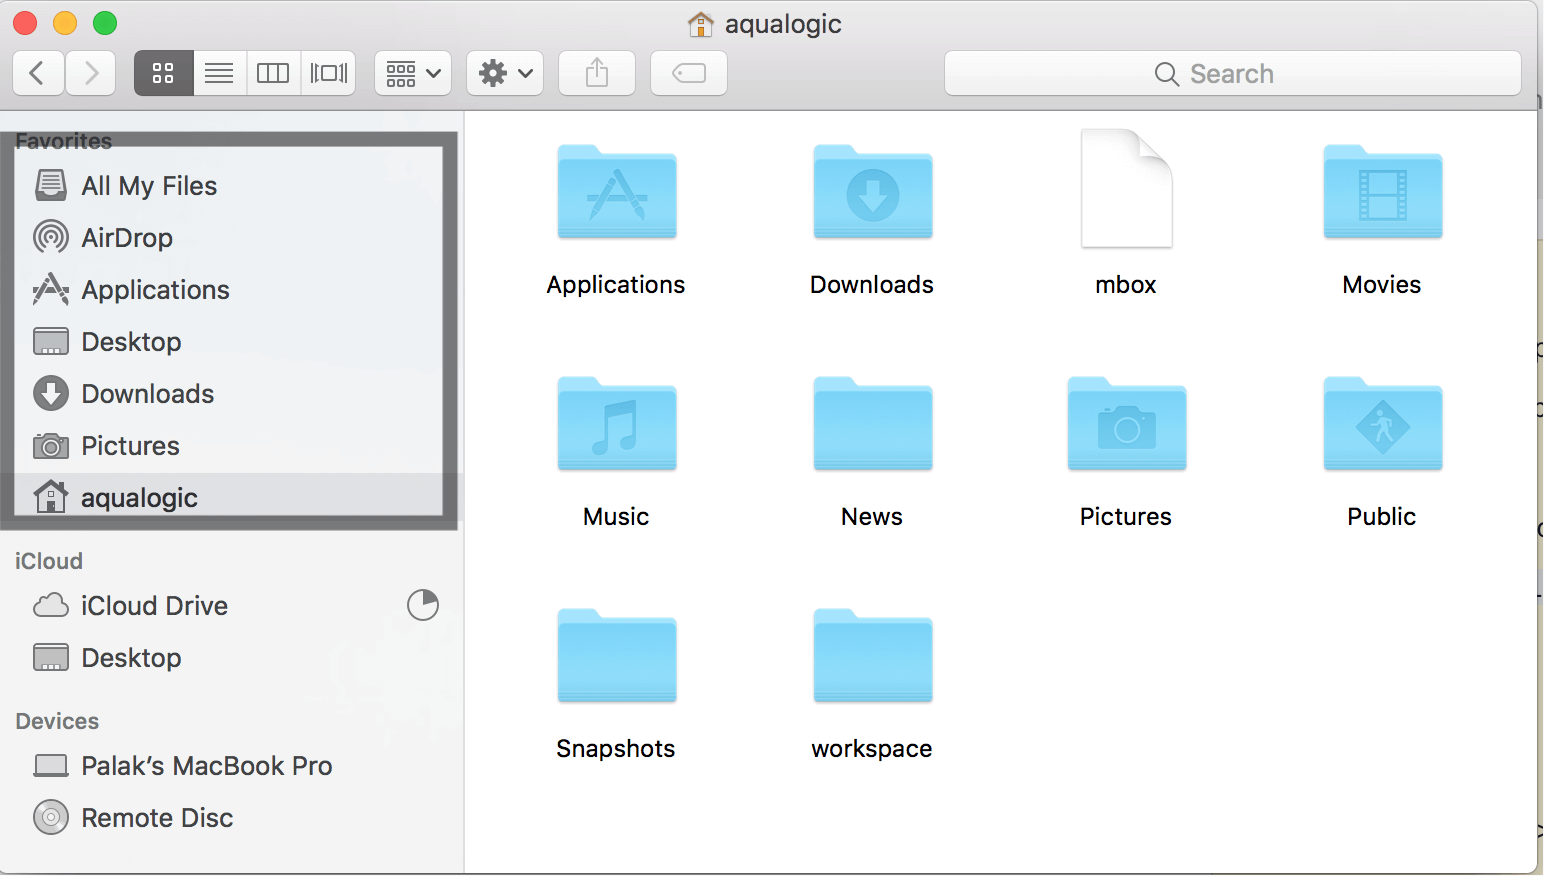 how to create a folder on word on a mac